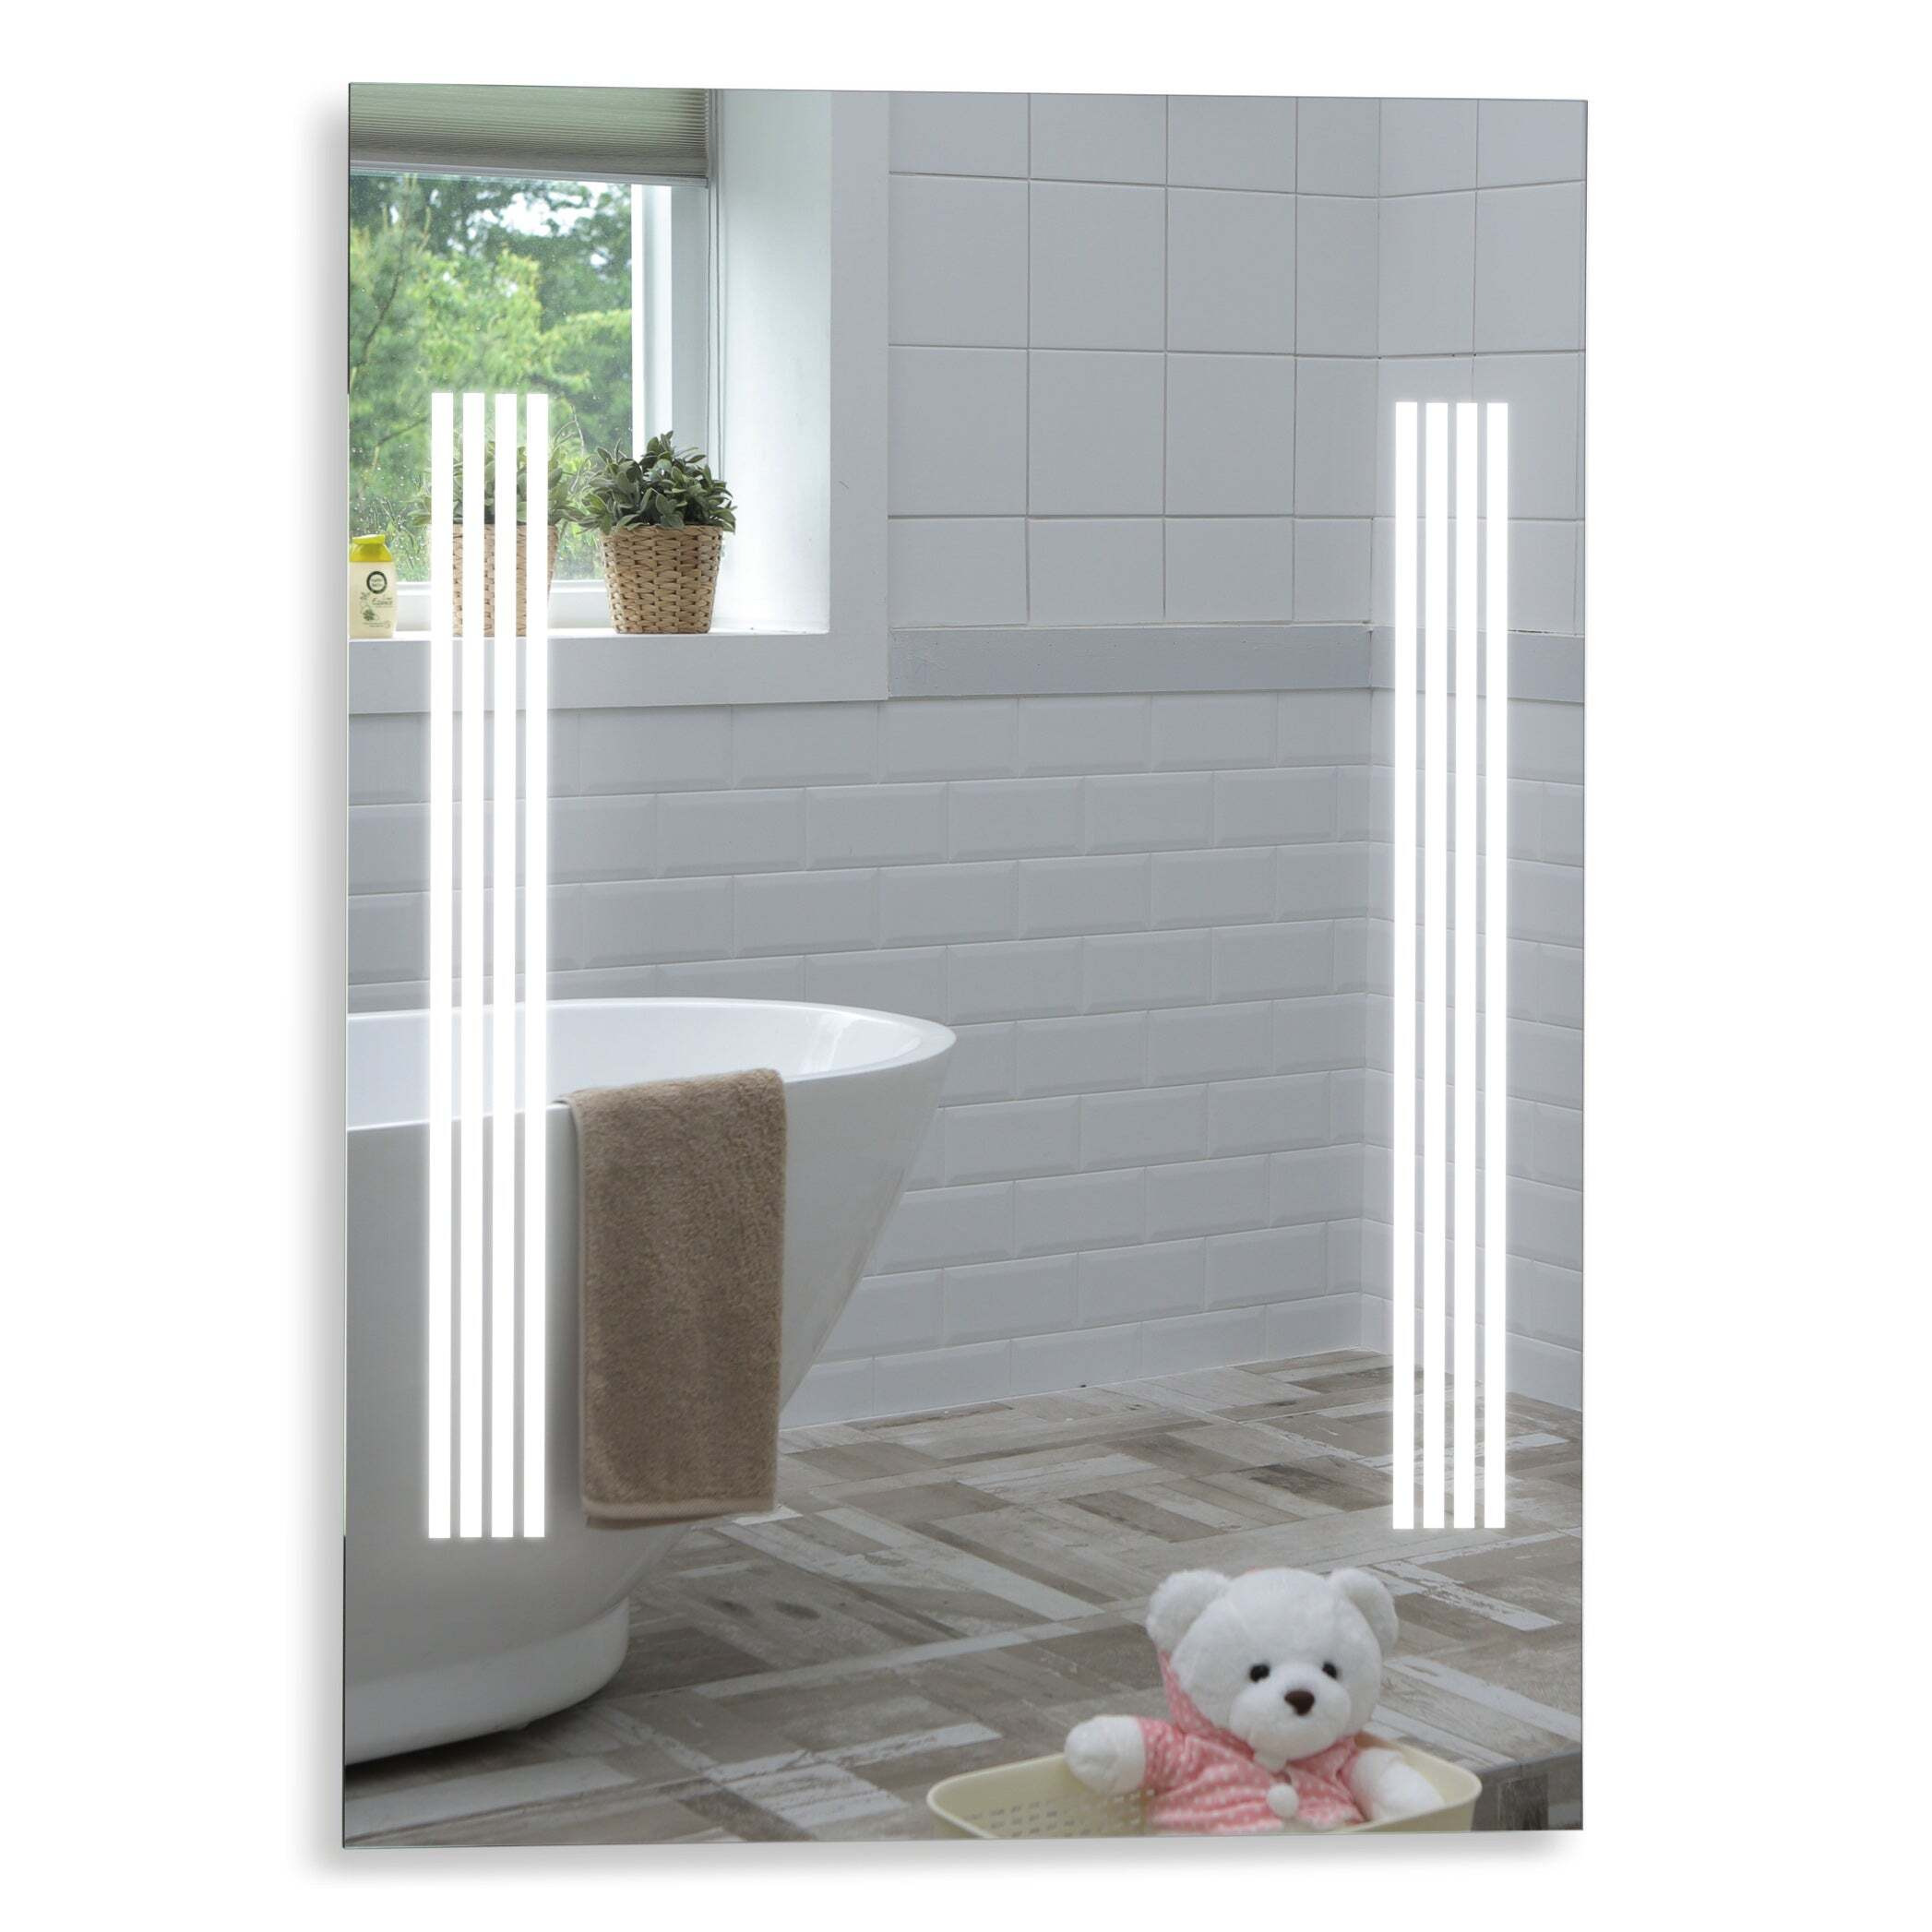 Apollo LED Illuminated Bathroom Wall Mirror YJ5320: Size-80Hx60Wcm